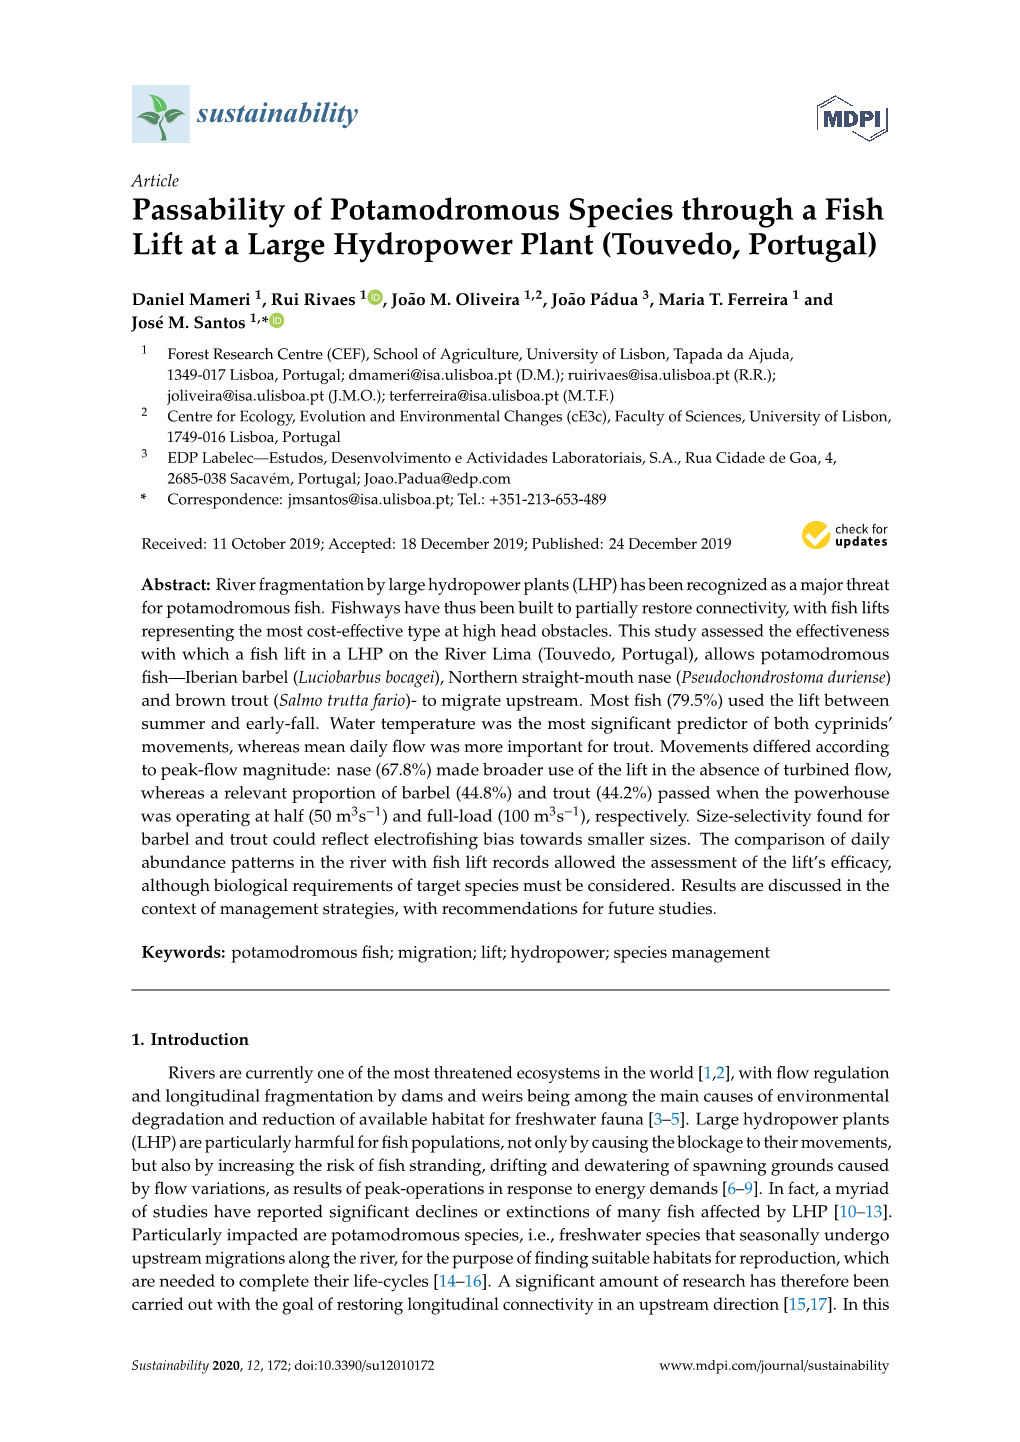 Passability of Potamodromous Species Through a Fish Lift at a Large Hydropower Plant (Touvedo, Portugal)